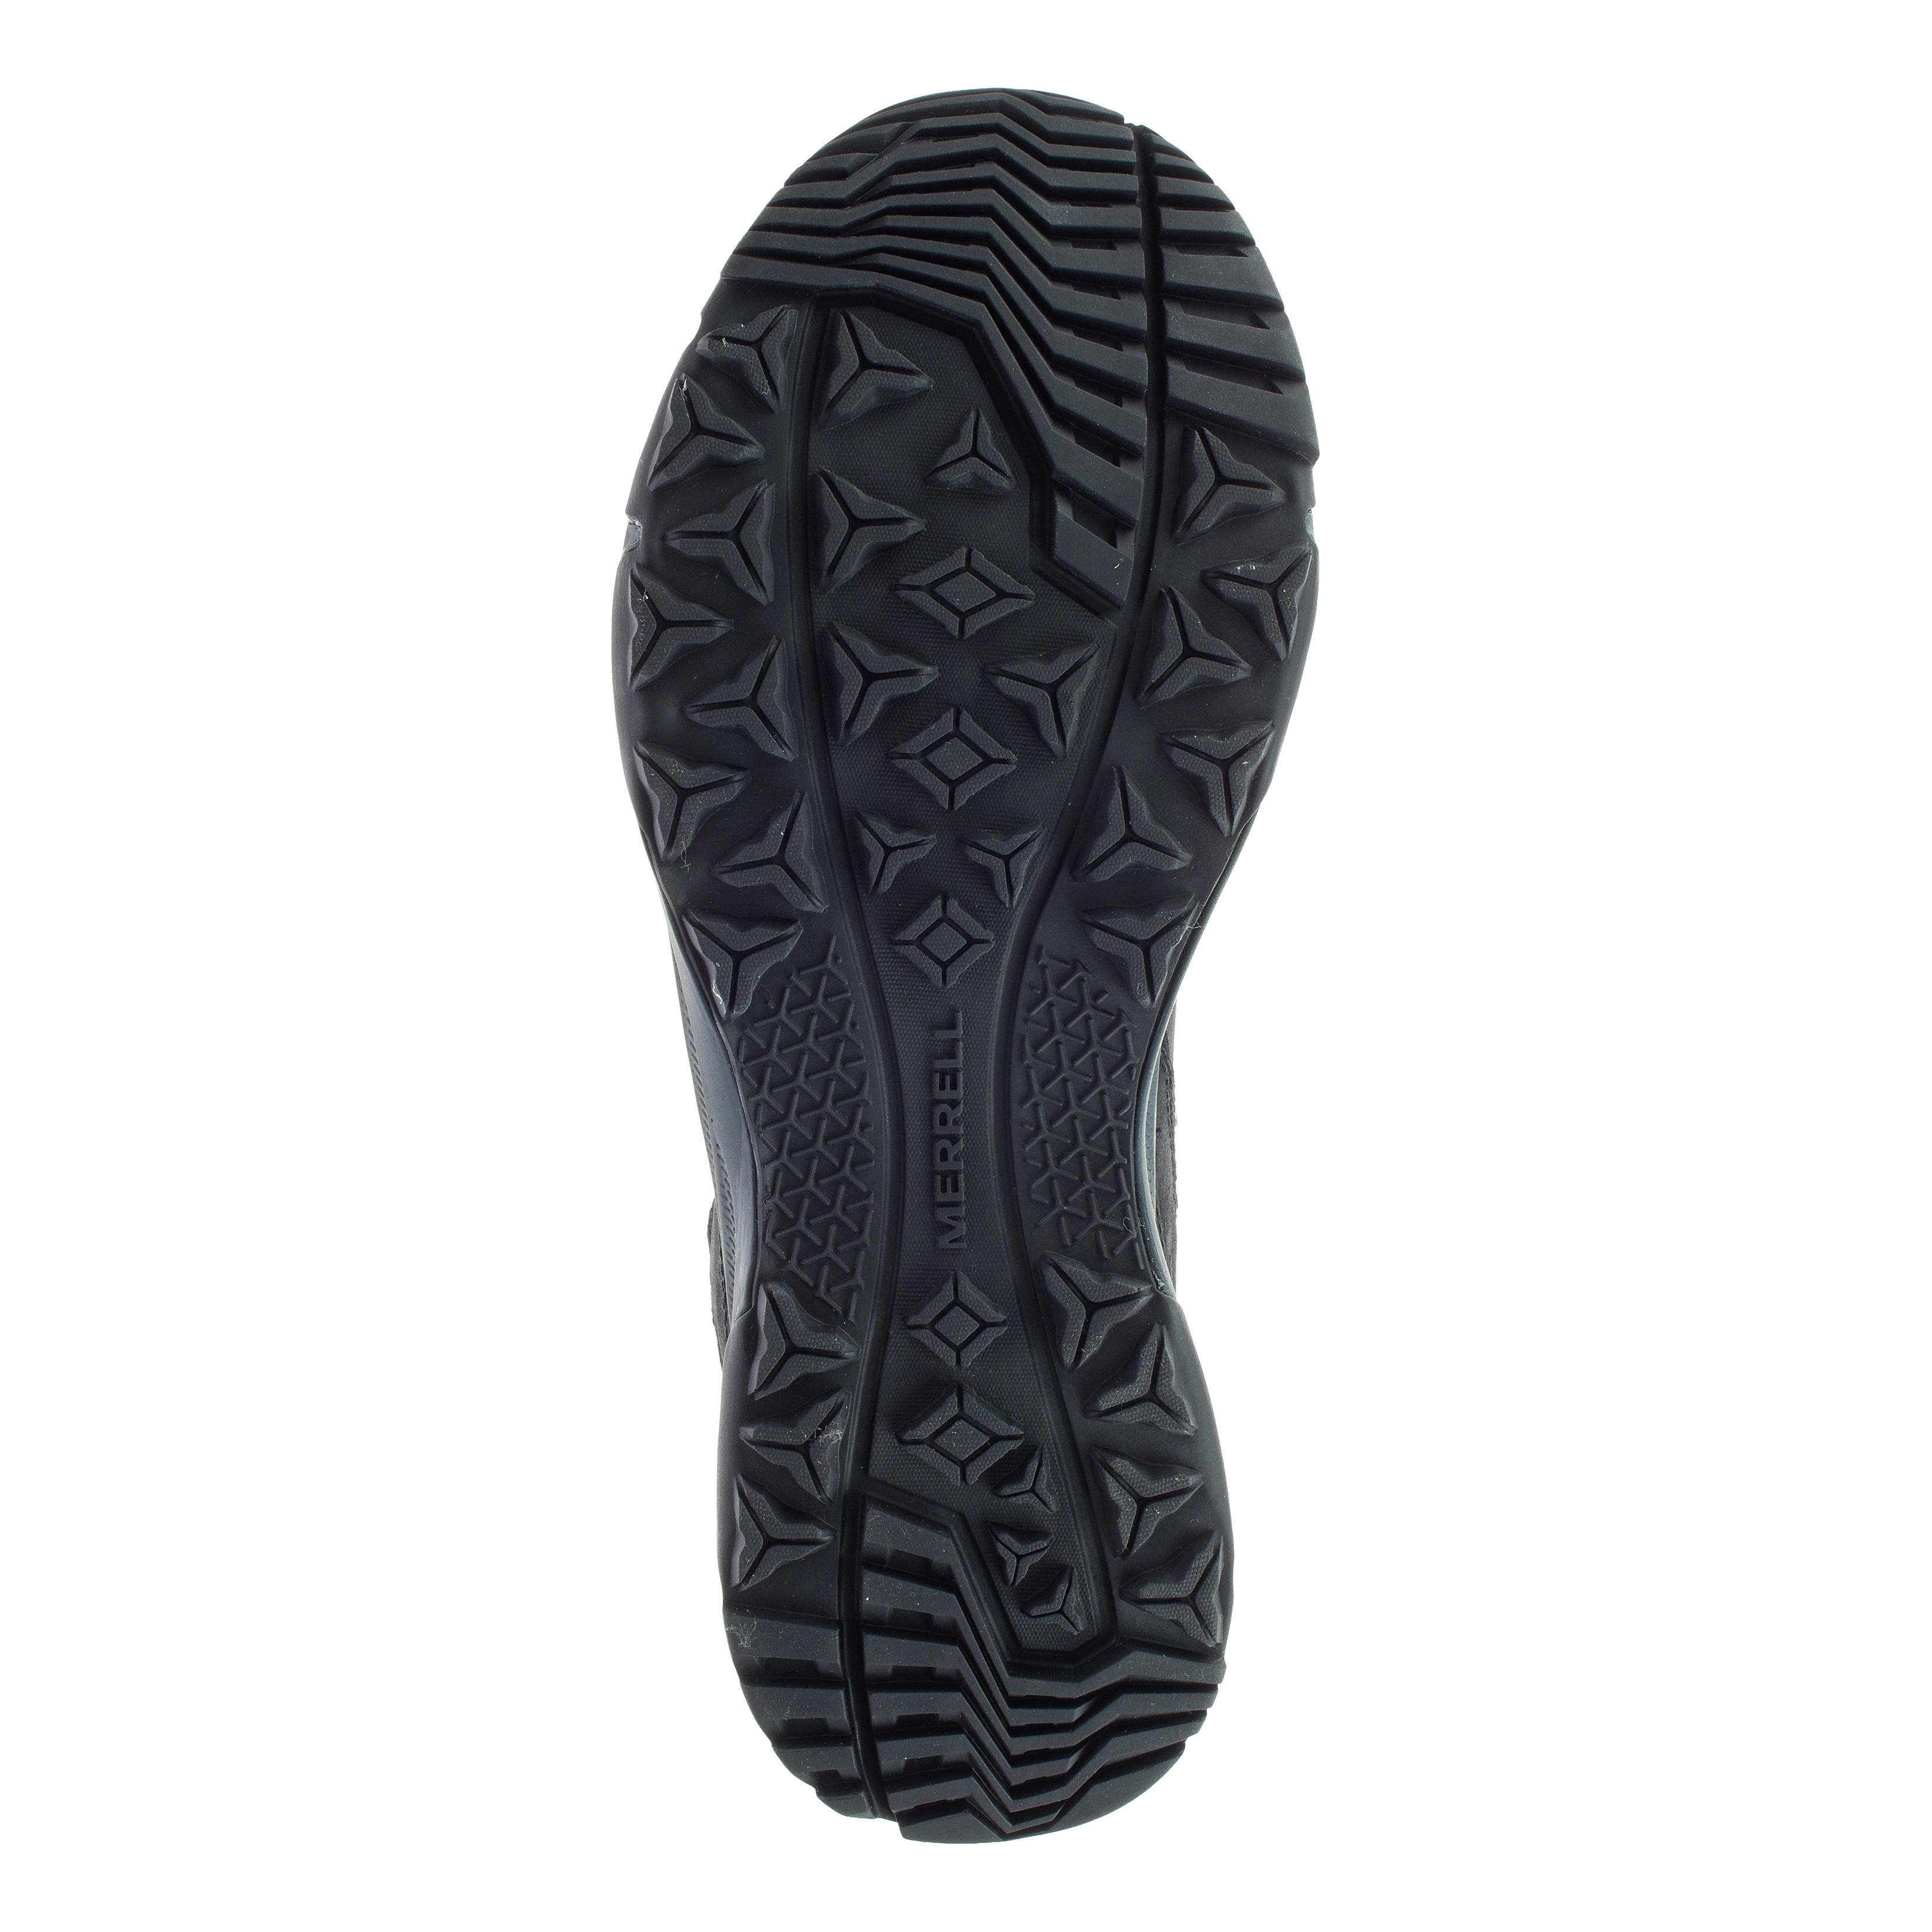 Merrell® Men’s Erie Leather Mid Waterproof Hiker - sole